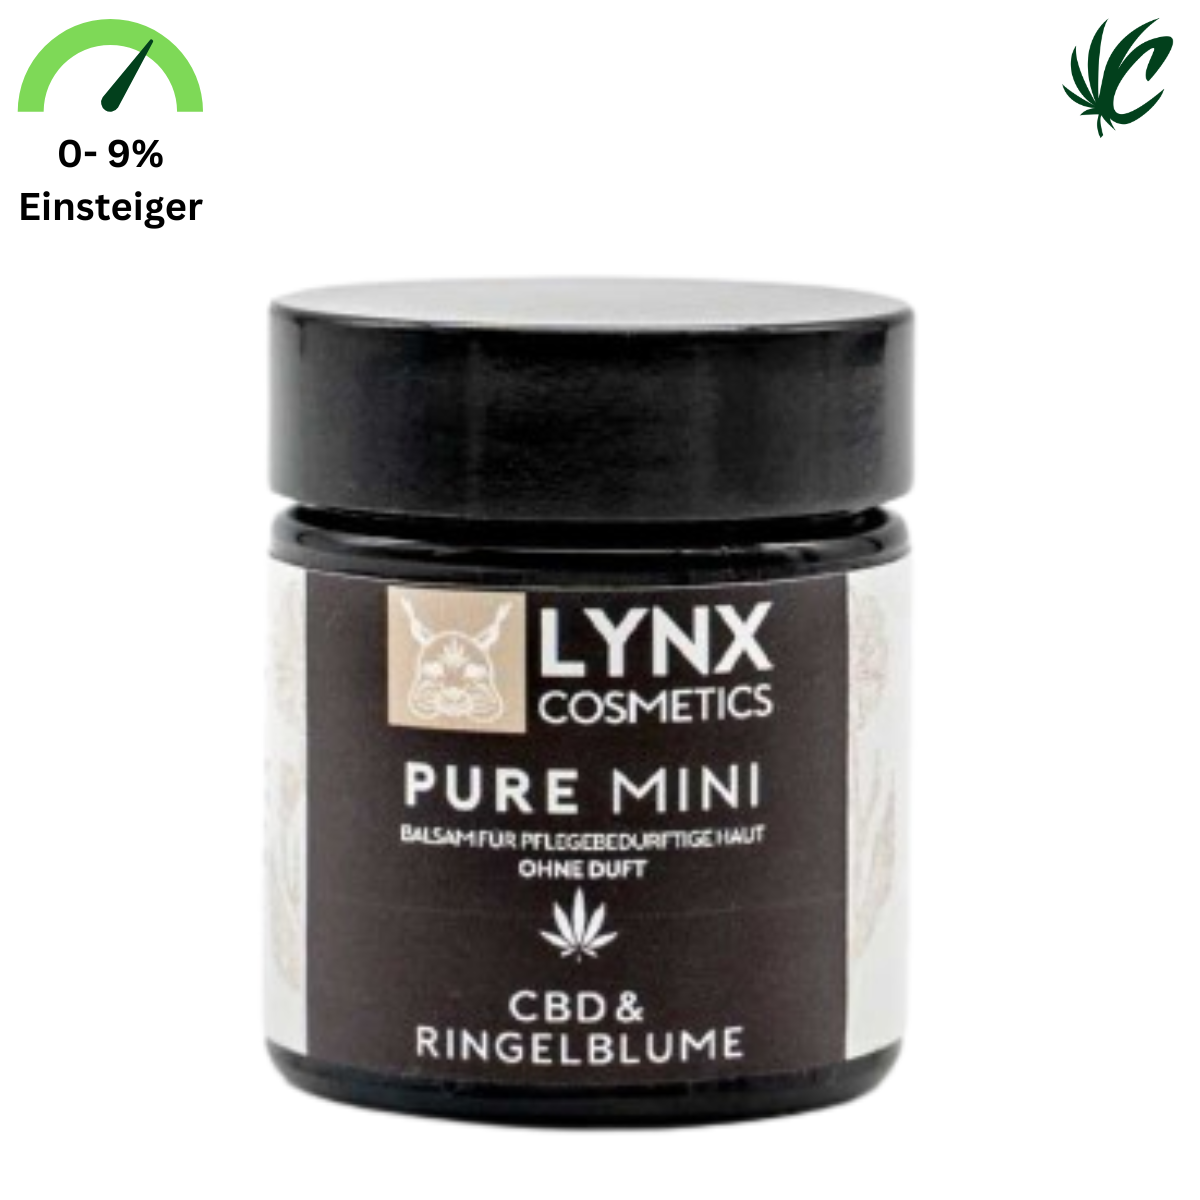 LYNX CBD Balsam Ringelblume Pure 2,5% / 5% CBD  25g